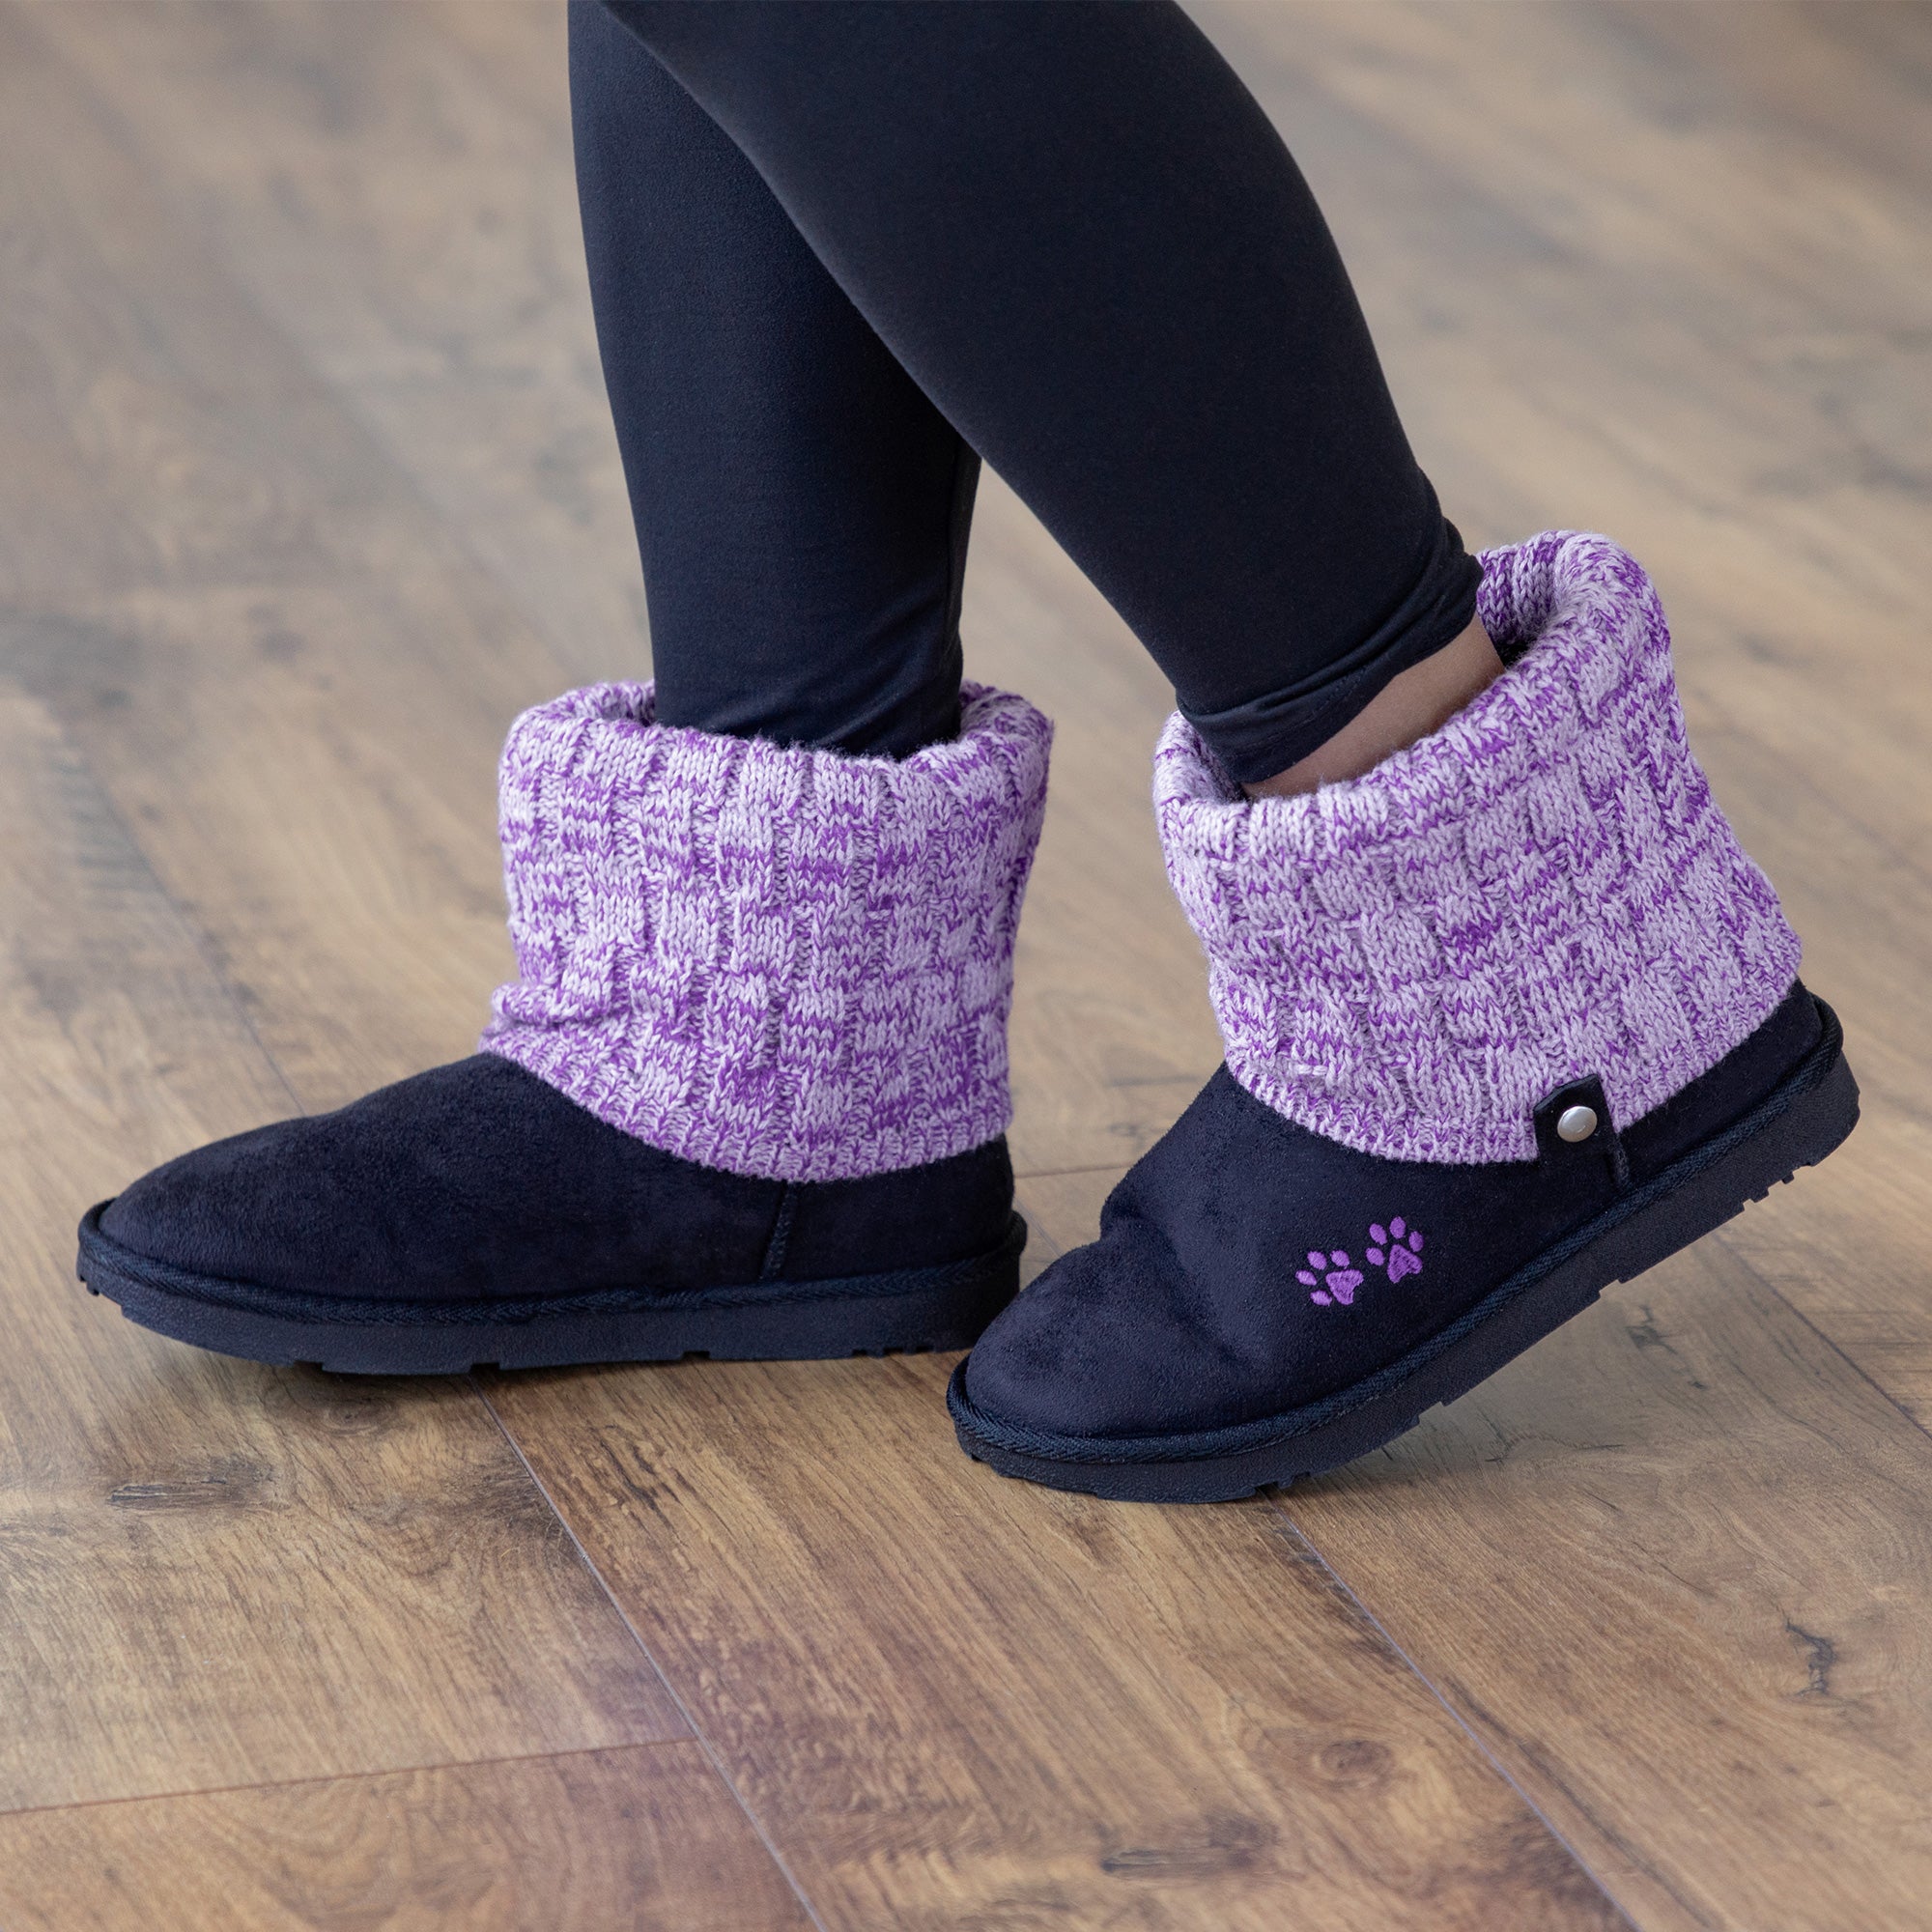 Paw Print Knit Ankle Boots - Black/Purple - 6